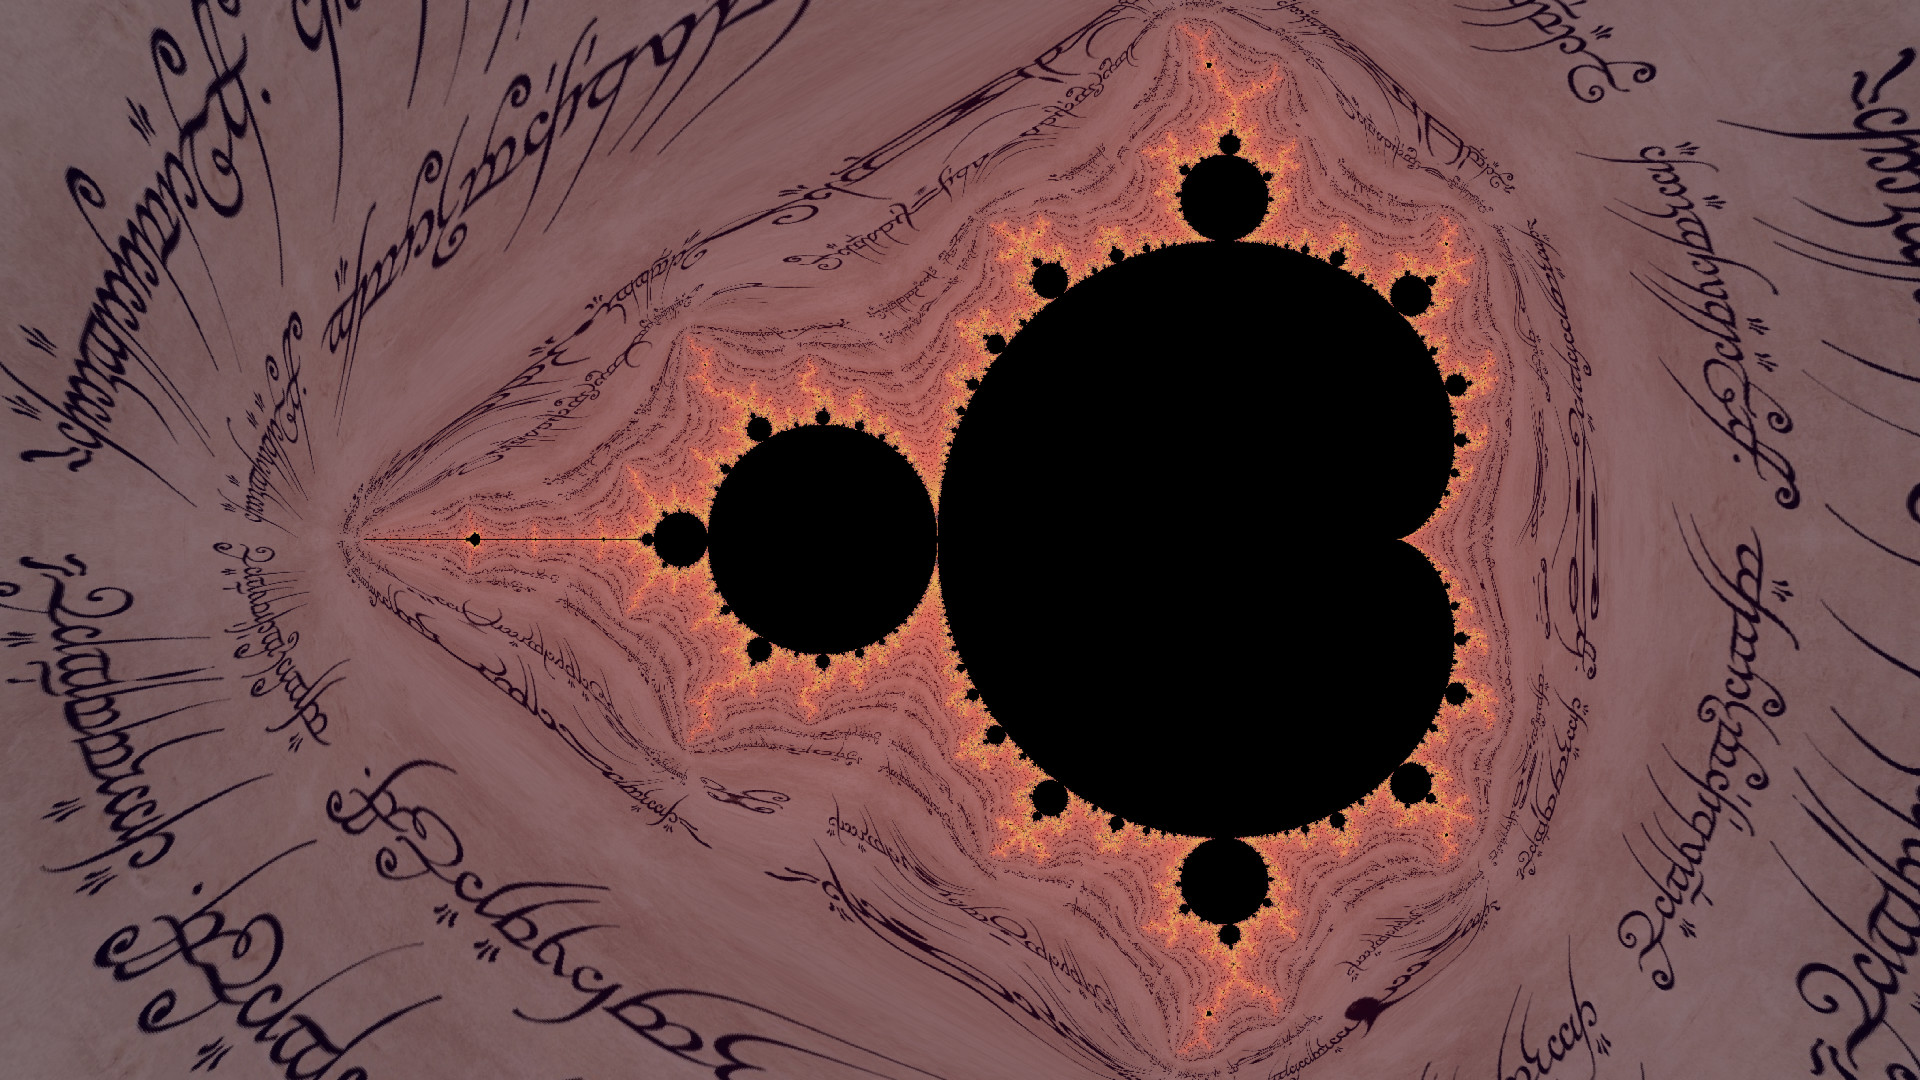 Textured Mandelbrot image